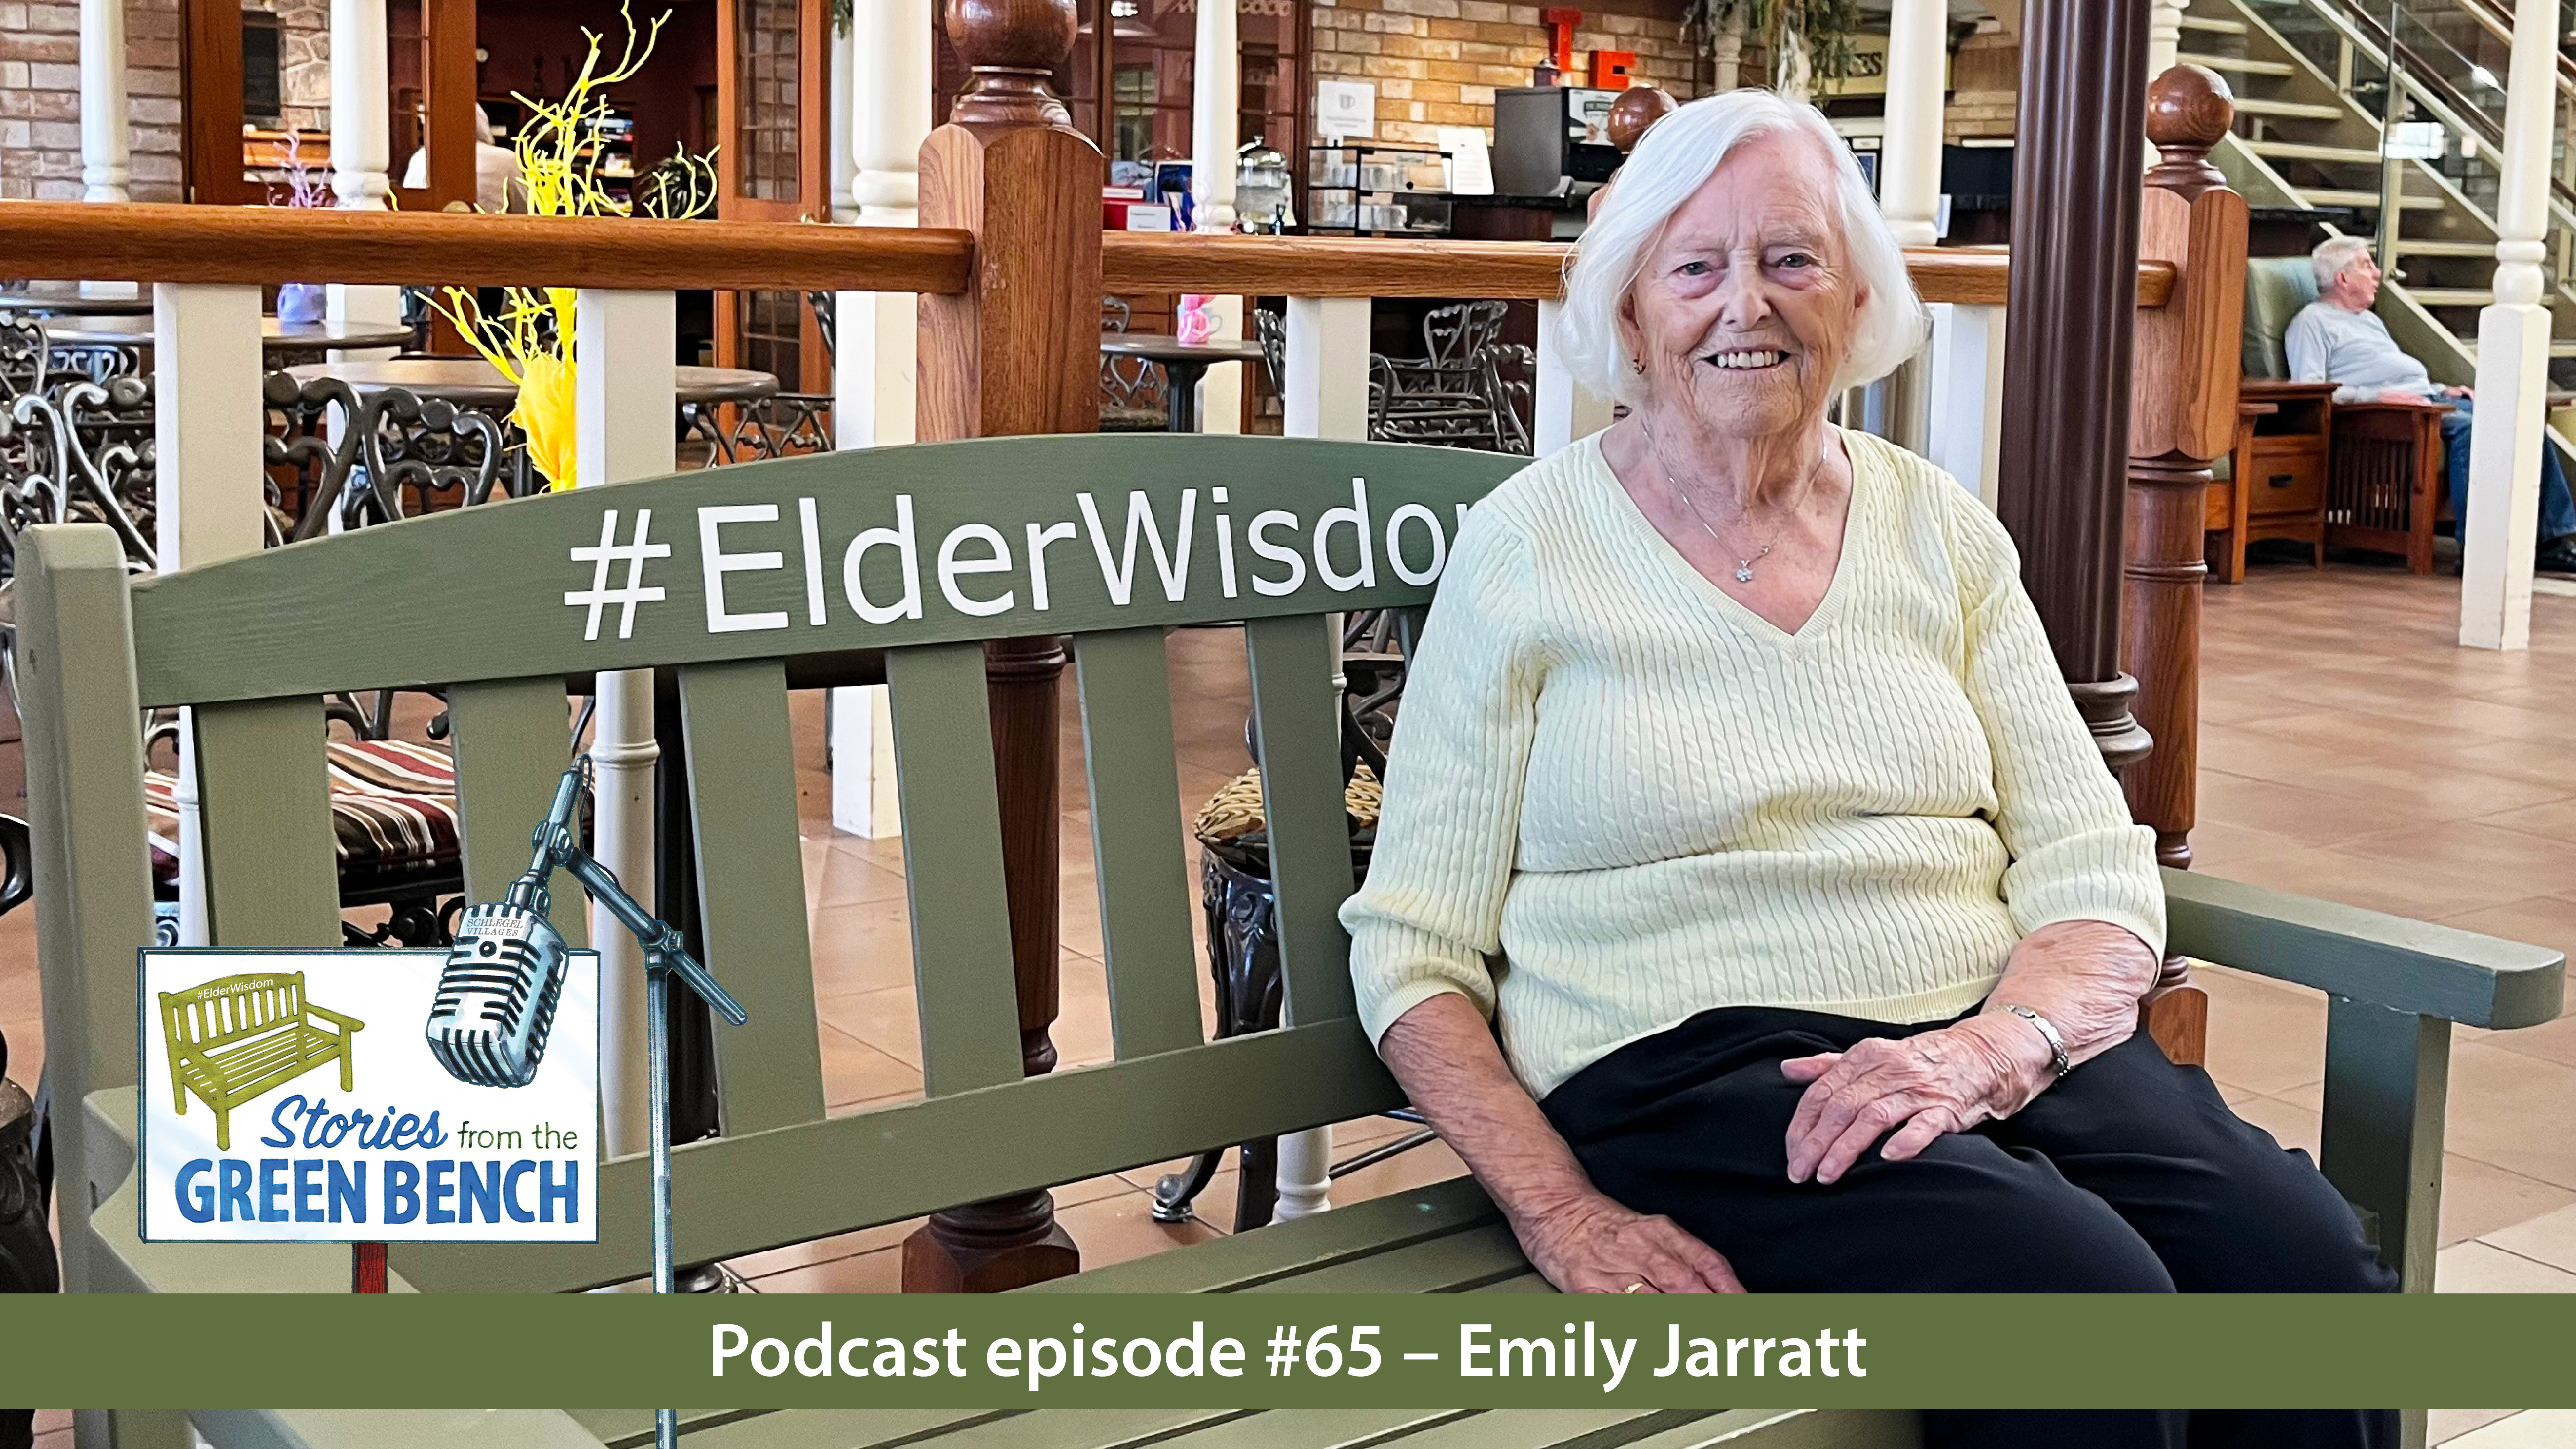 Emily Jarratt sitting on the green #ElderWisdom bench at The Village of Tansley Woods